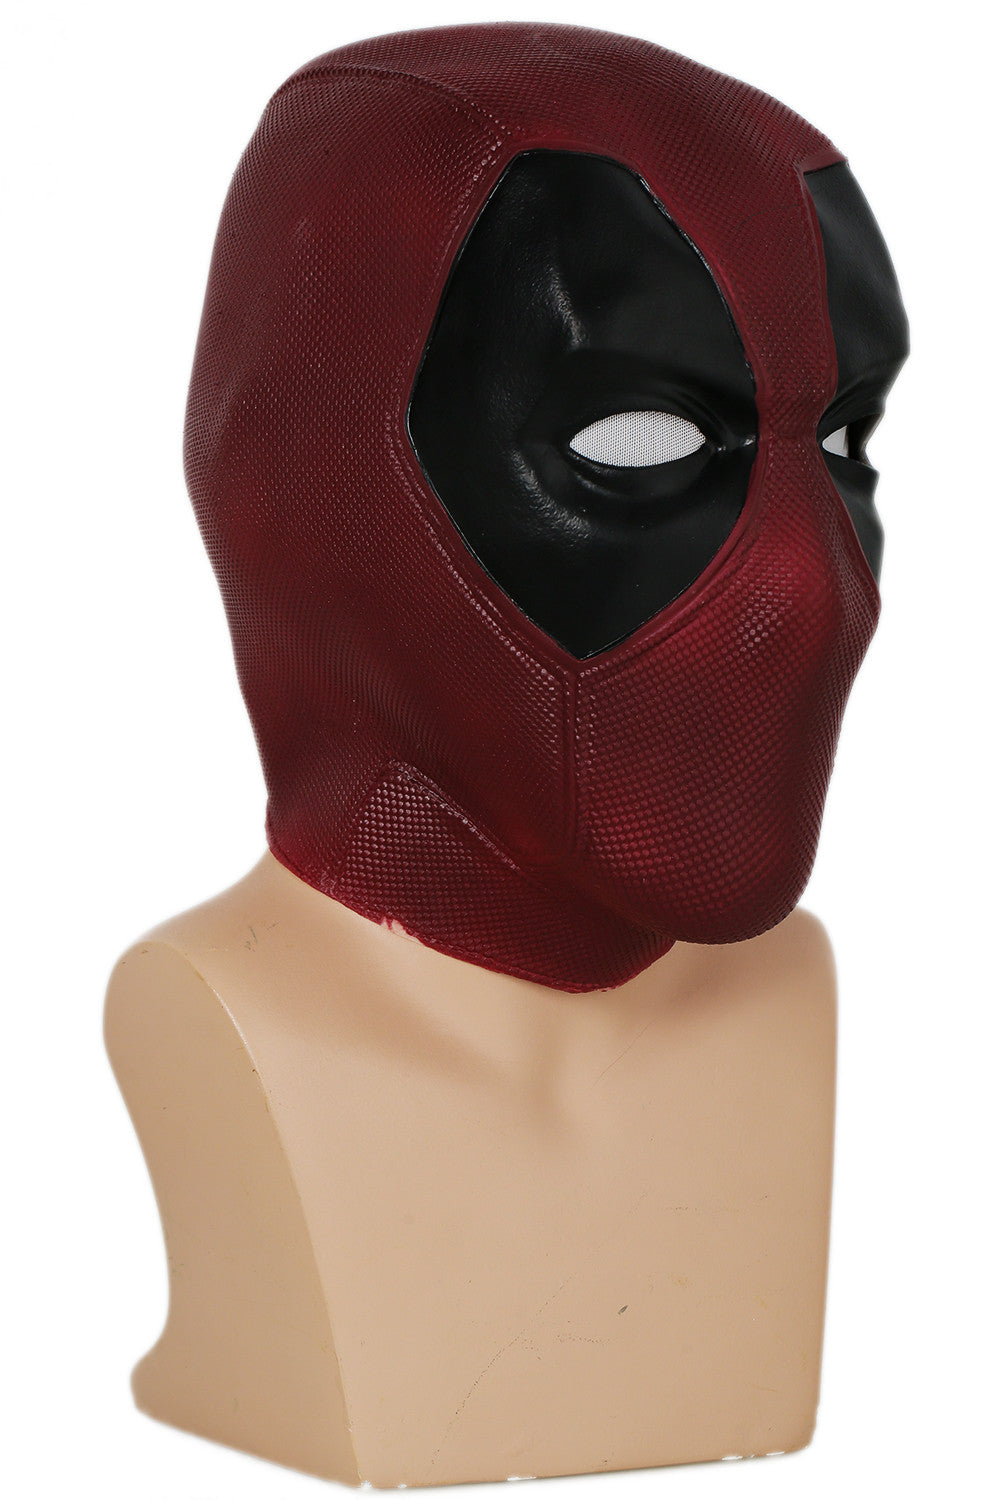 xcoser-de,Deadpool Maske Film Version Latex Kopf Gesicht Helm,Deadpool Maske